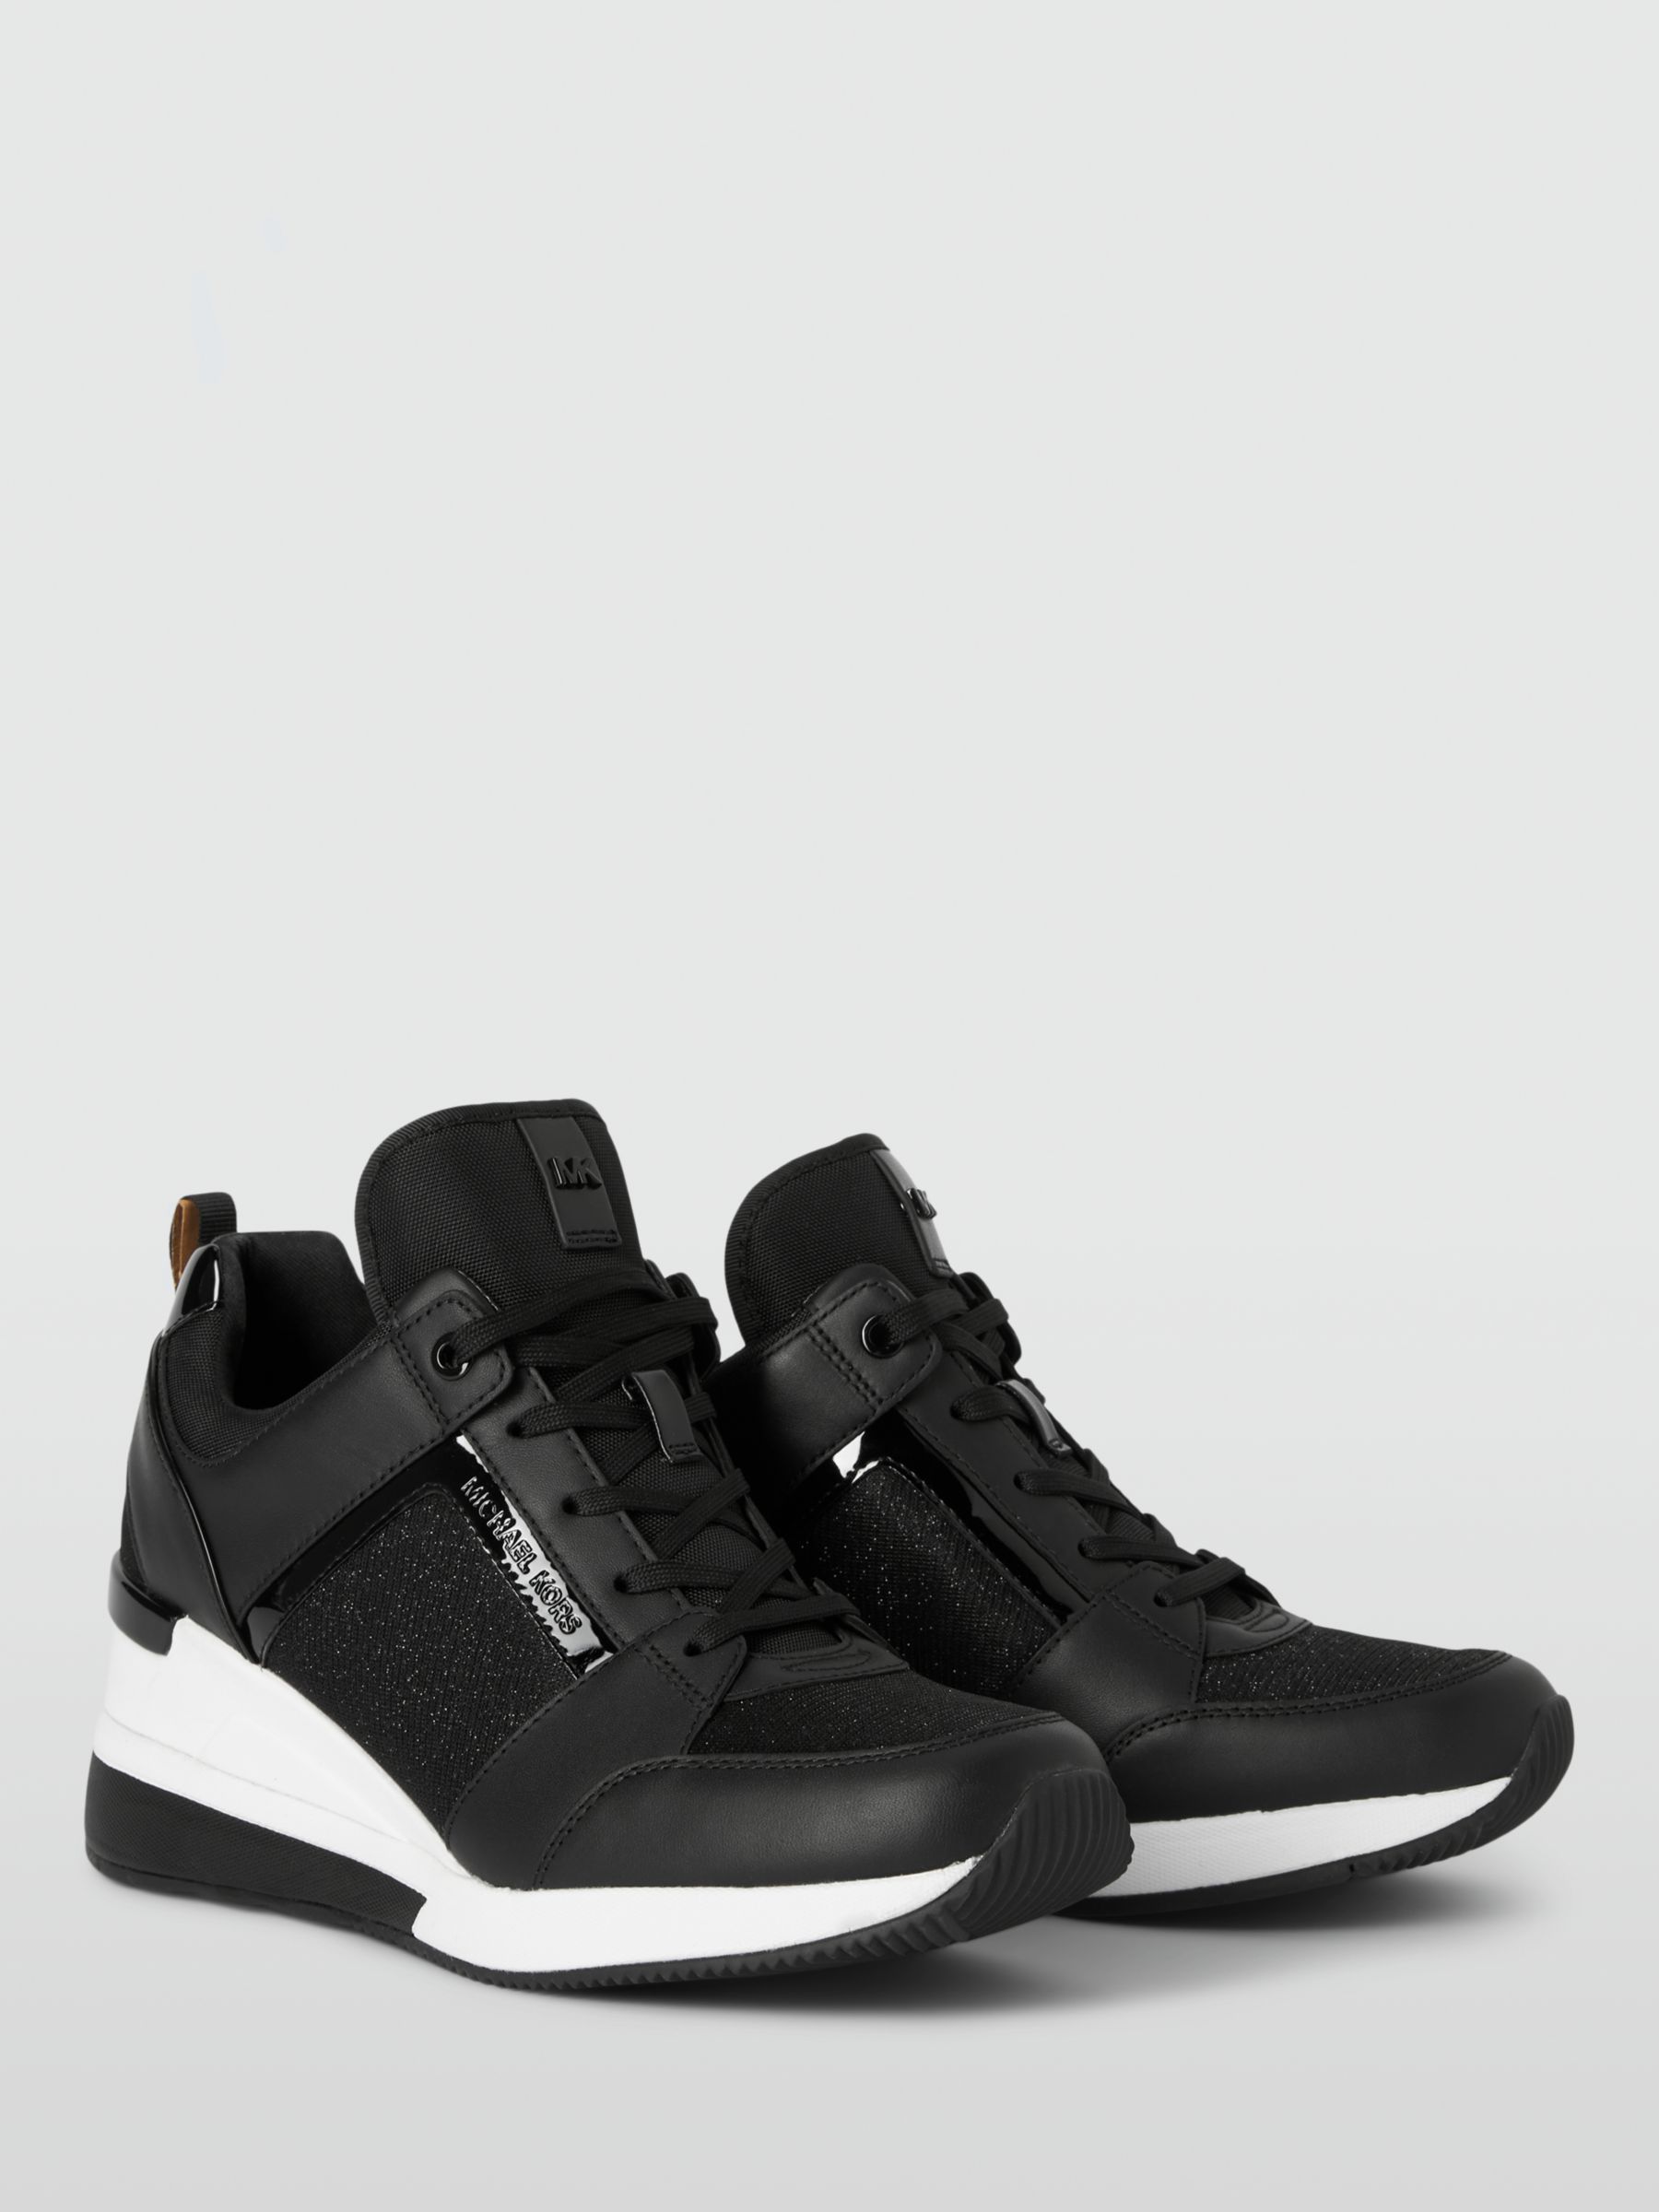 Michael Kors Georgie Leather Wedge Heel Trainers, Black, 4